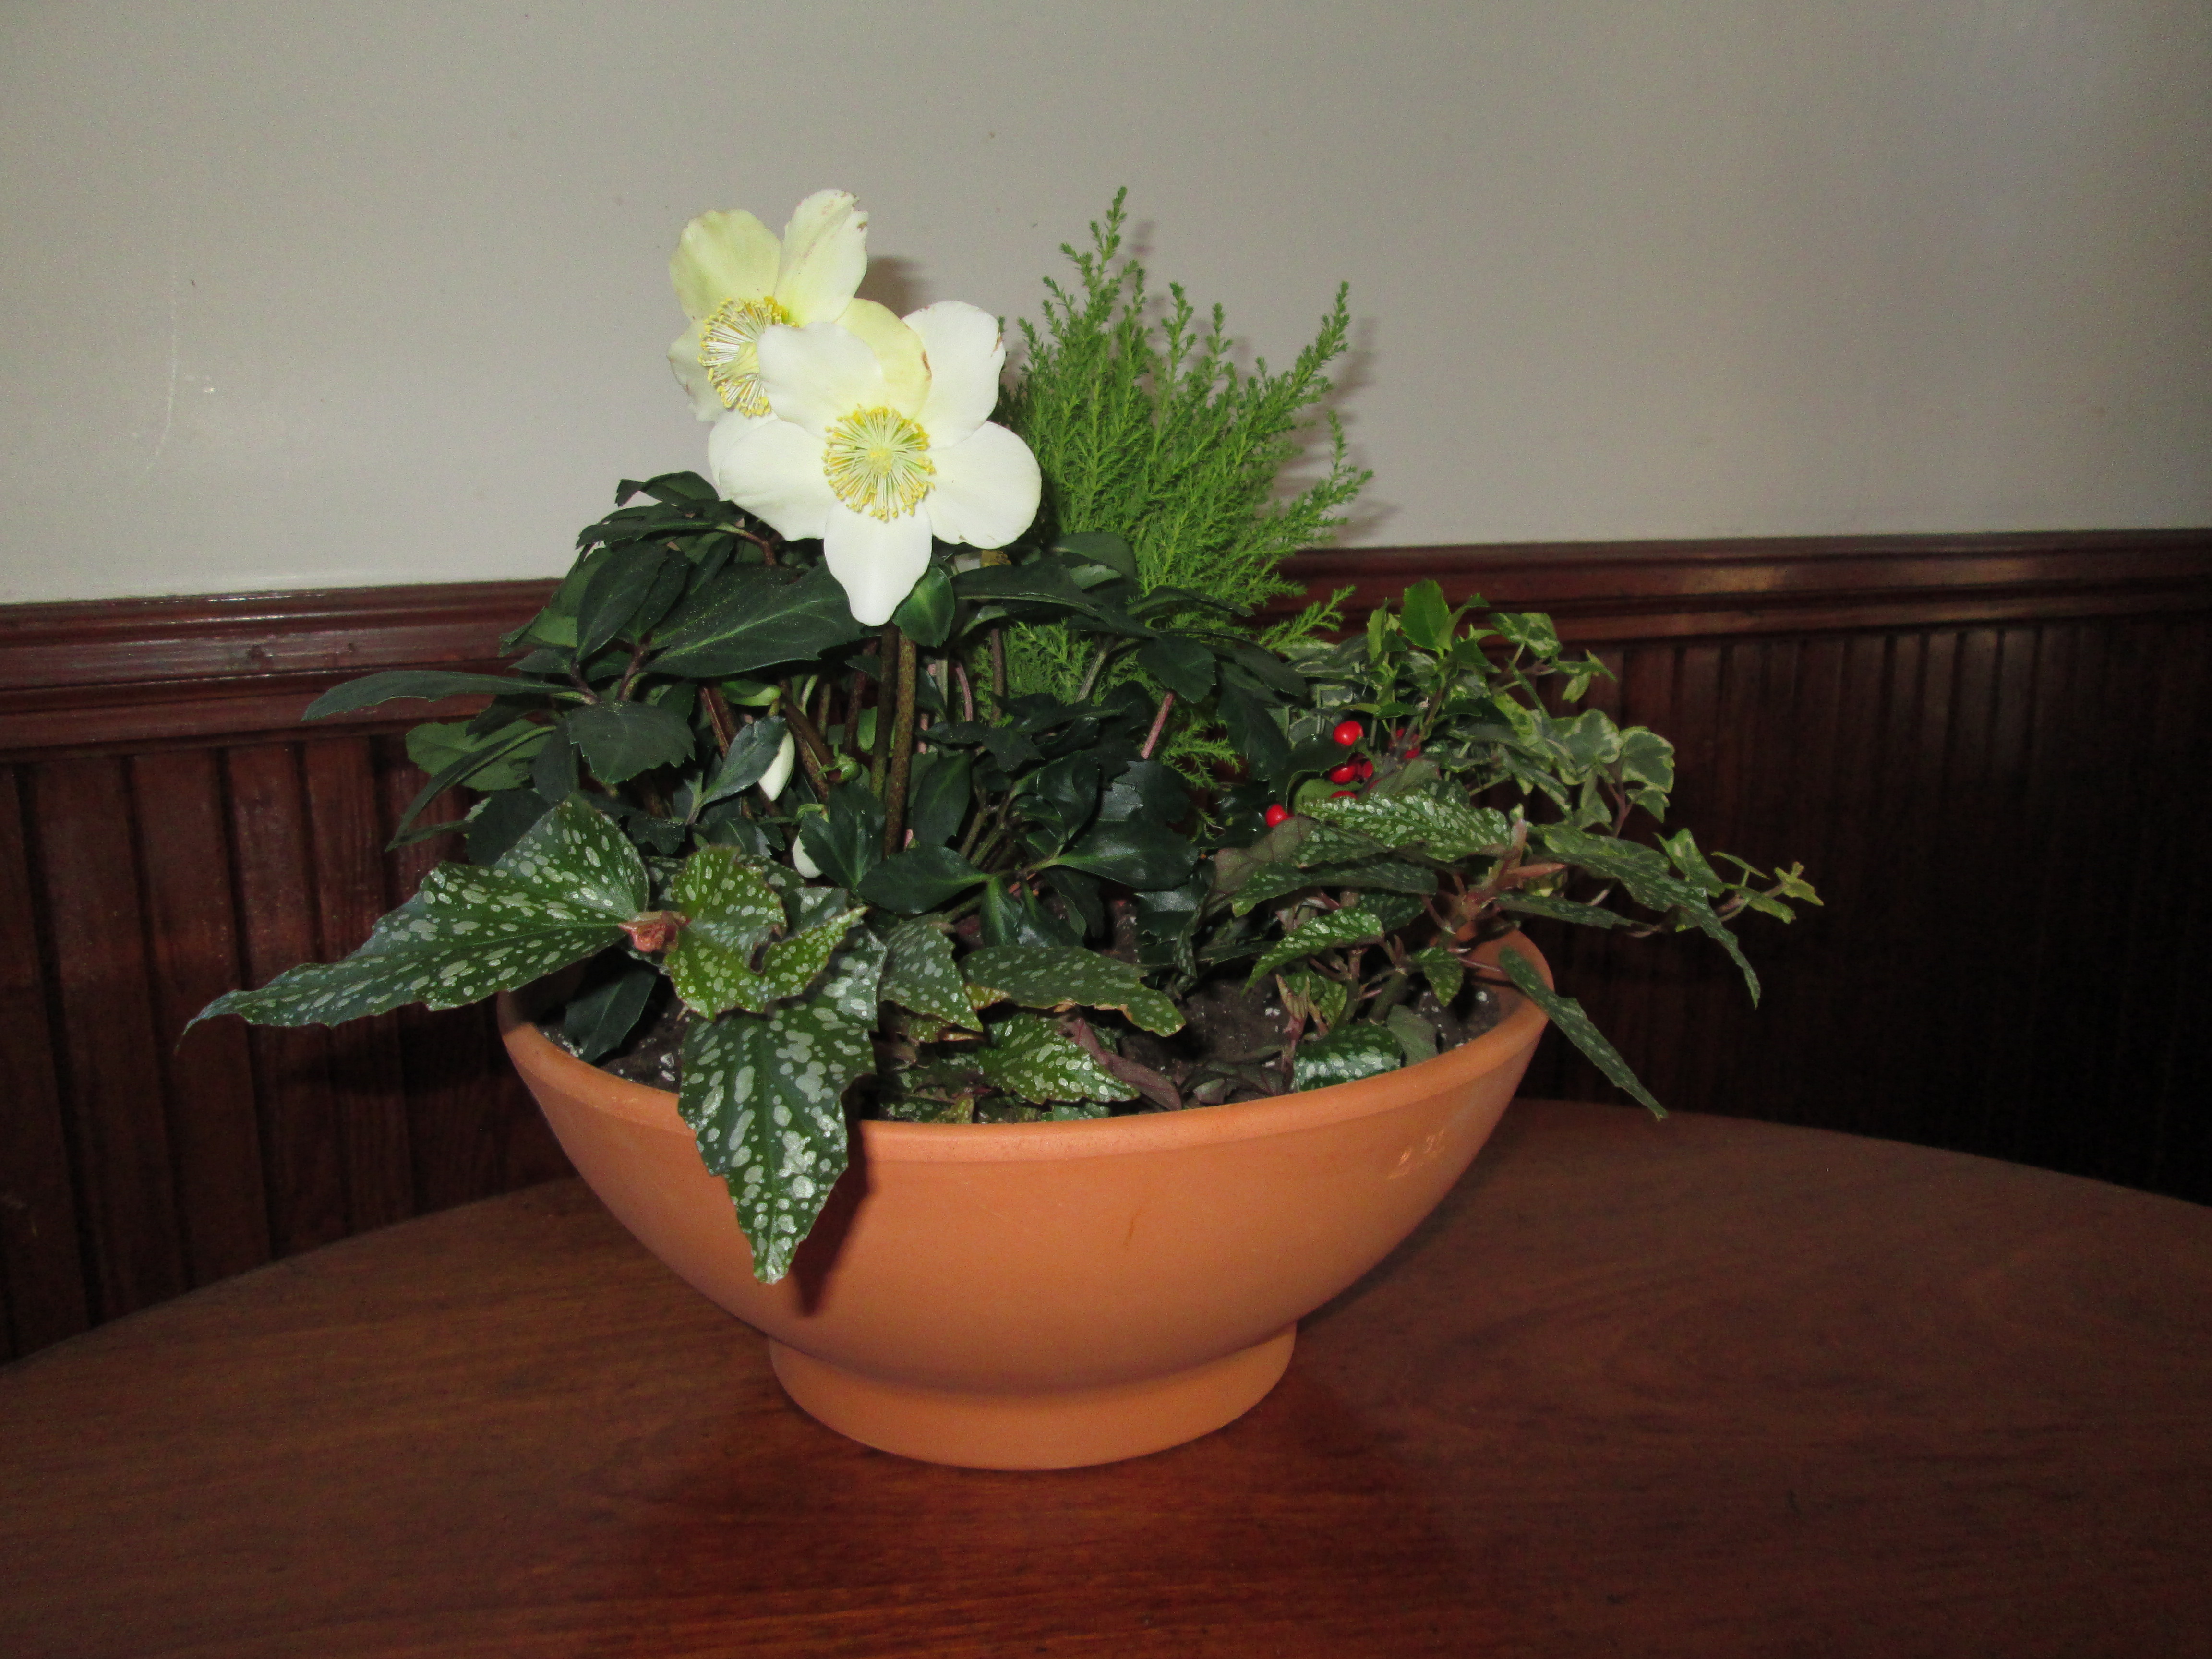 Winter plants terra cotta pot arrangement 12.14